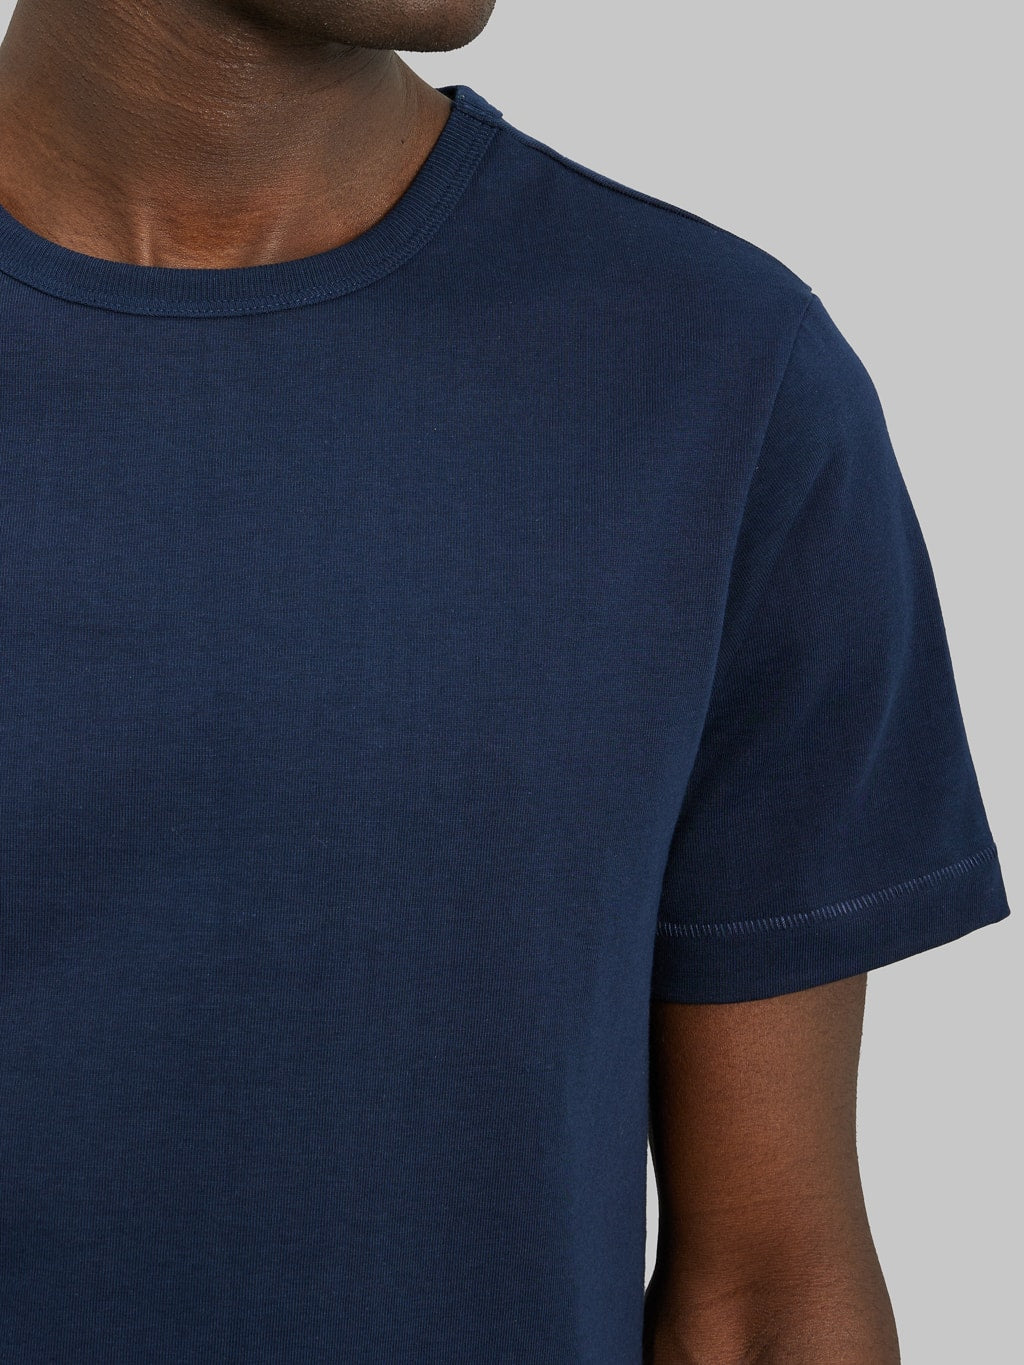 merz b schwanen good originals loopwheeled Tshirt classic fit blue details